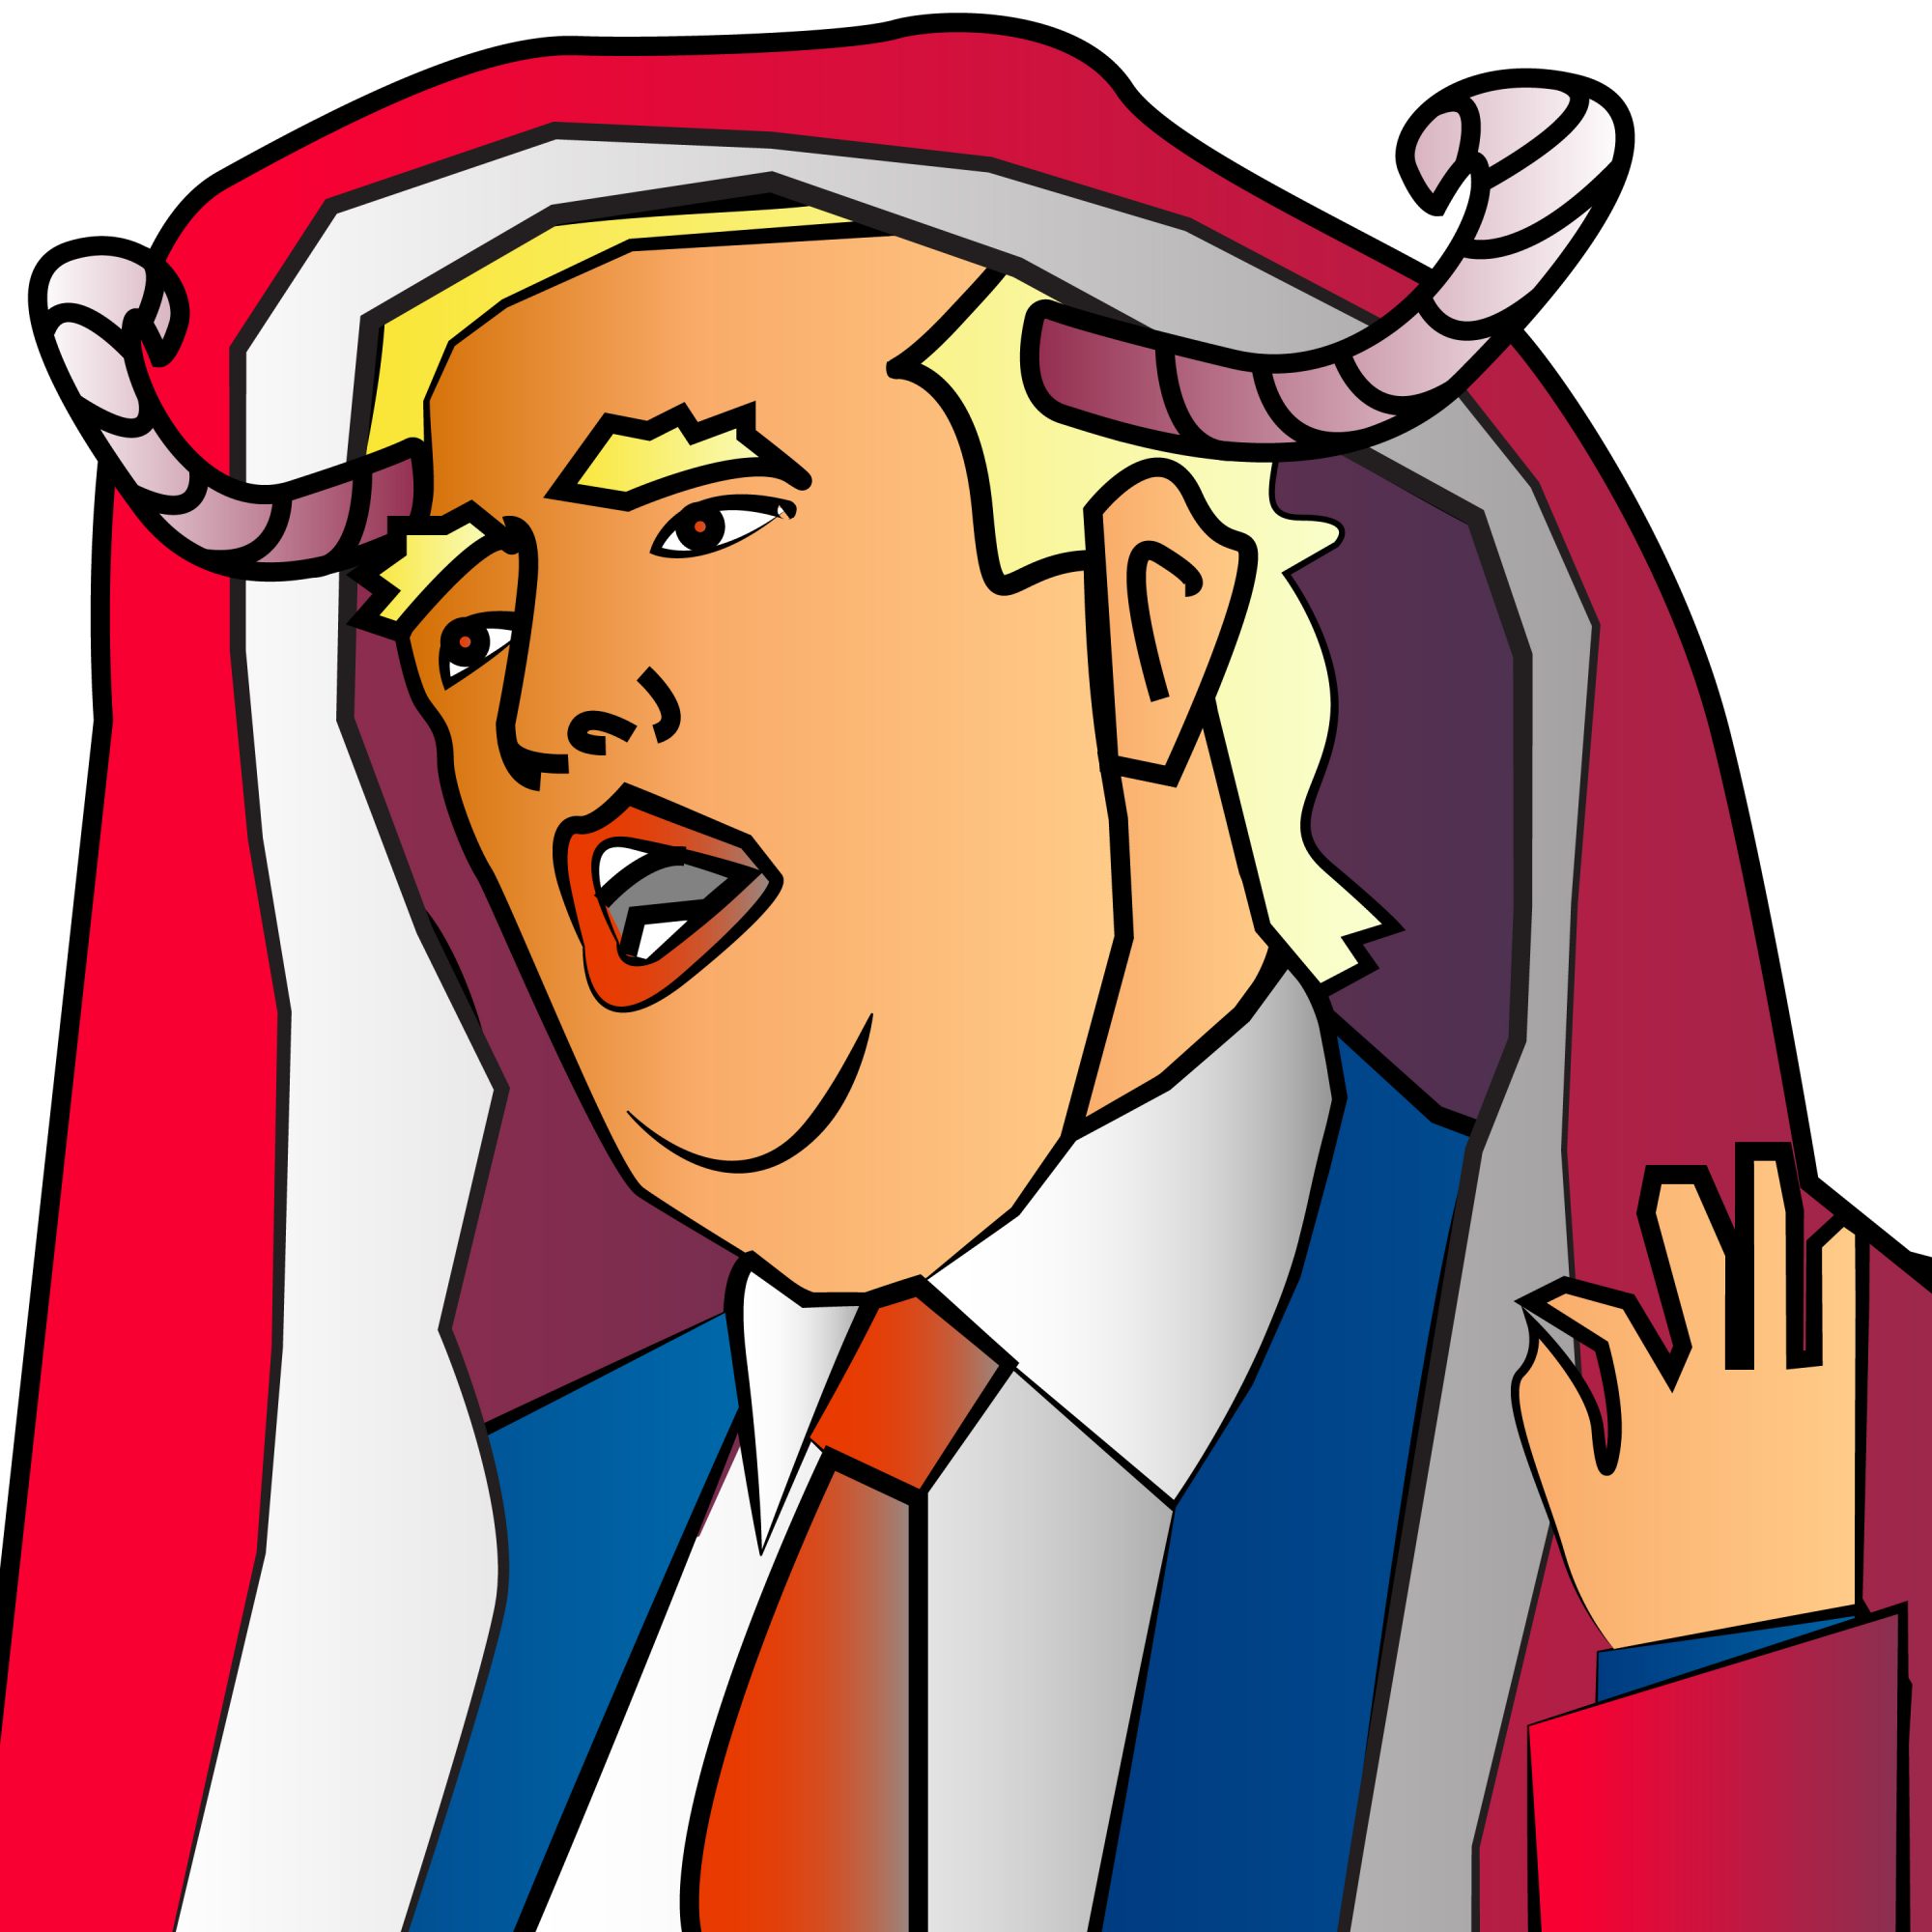 Krampus-Trump.jpg